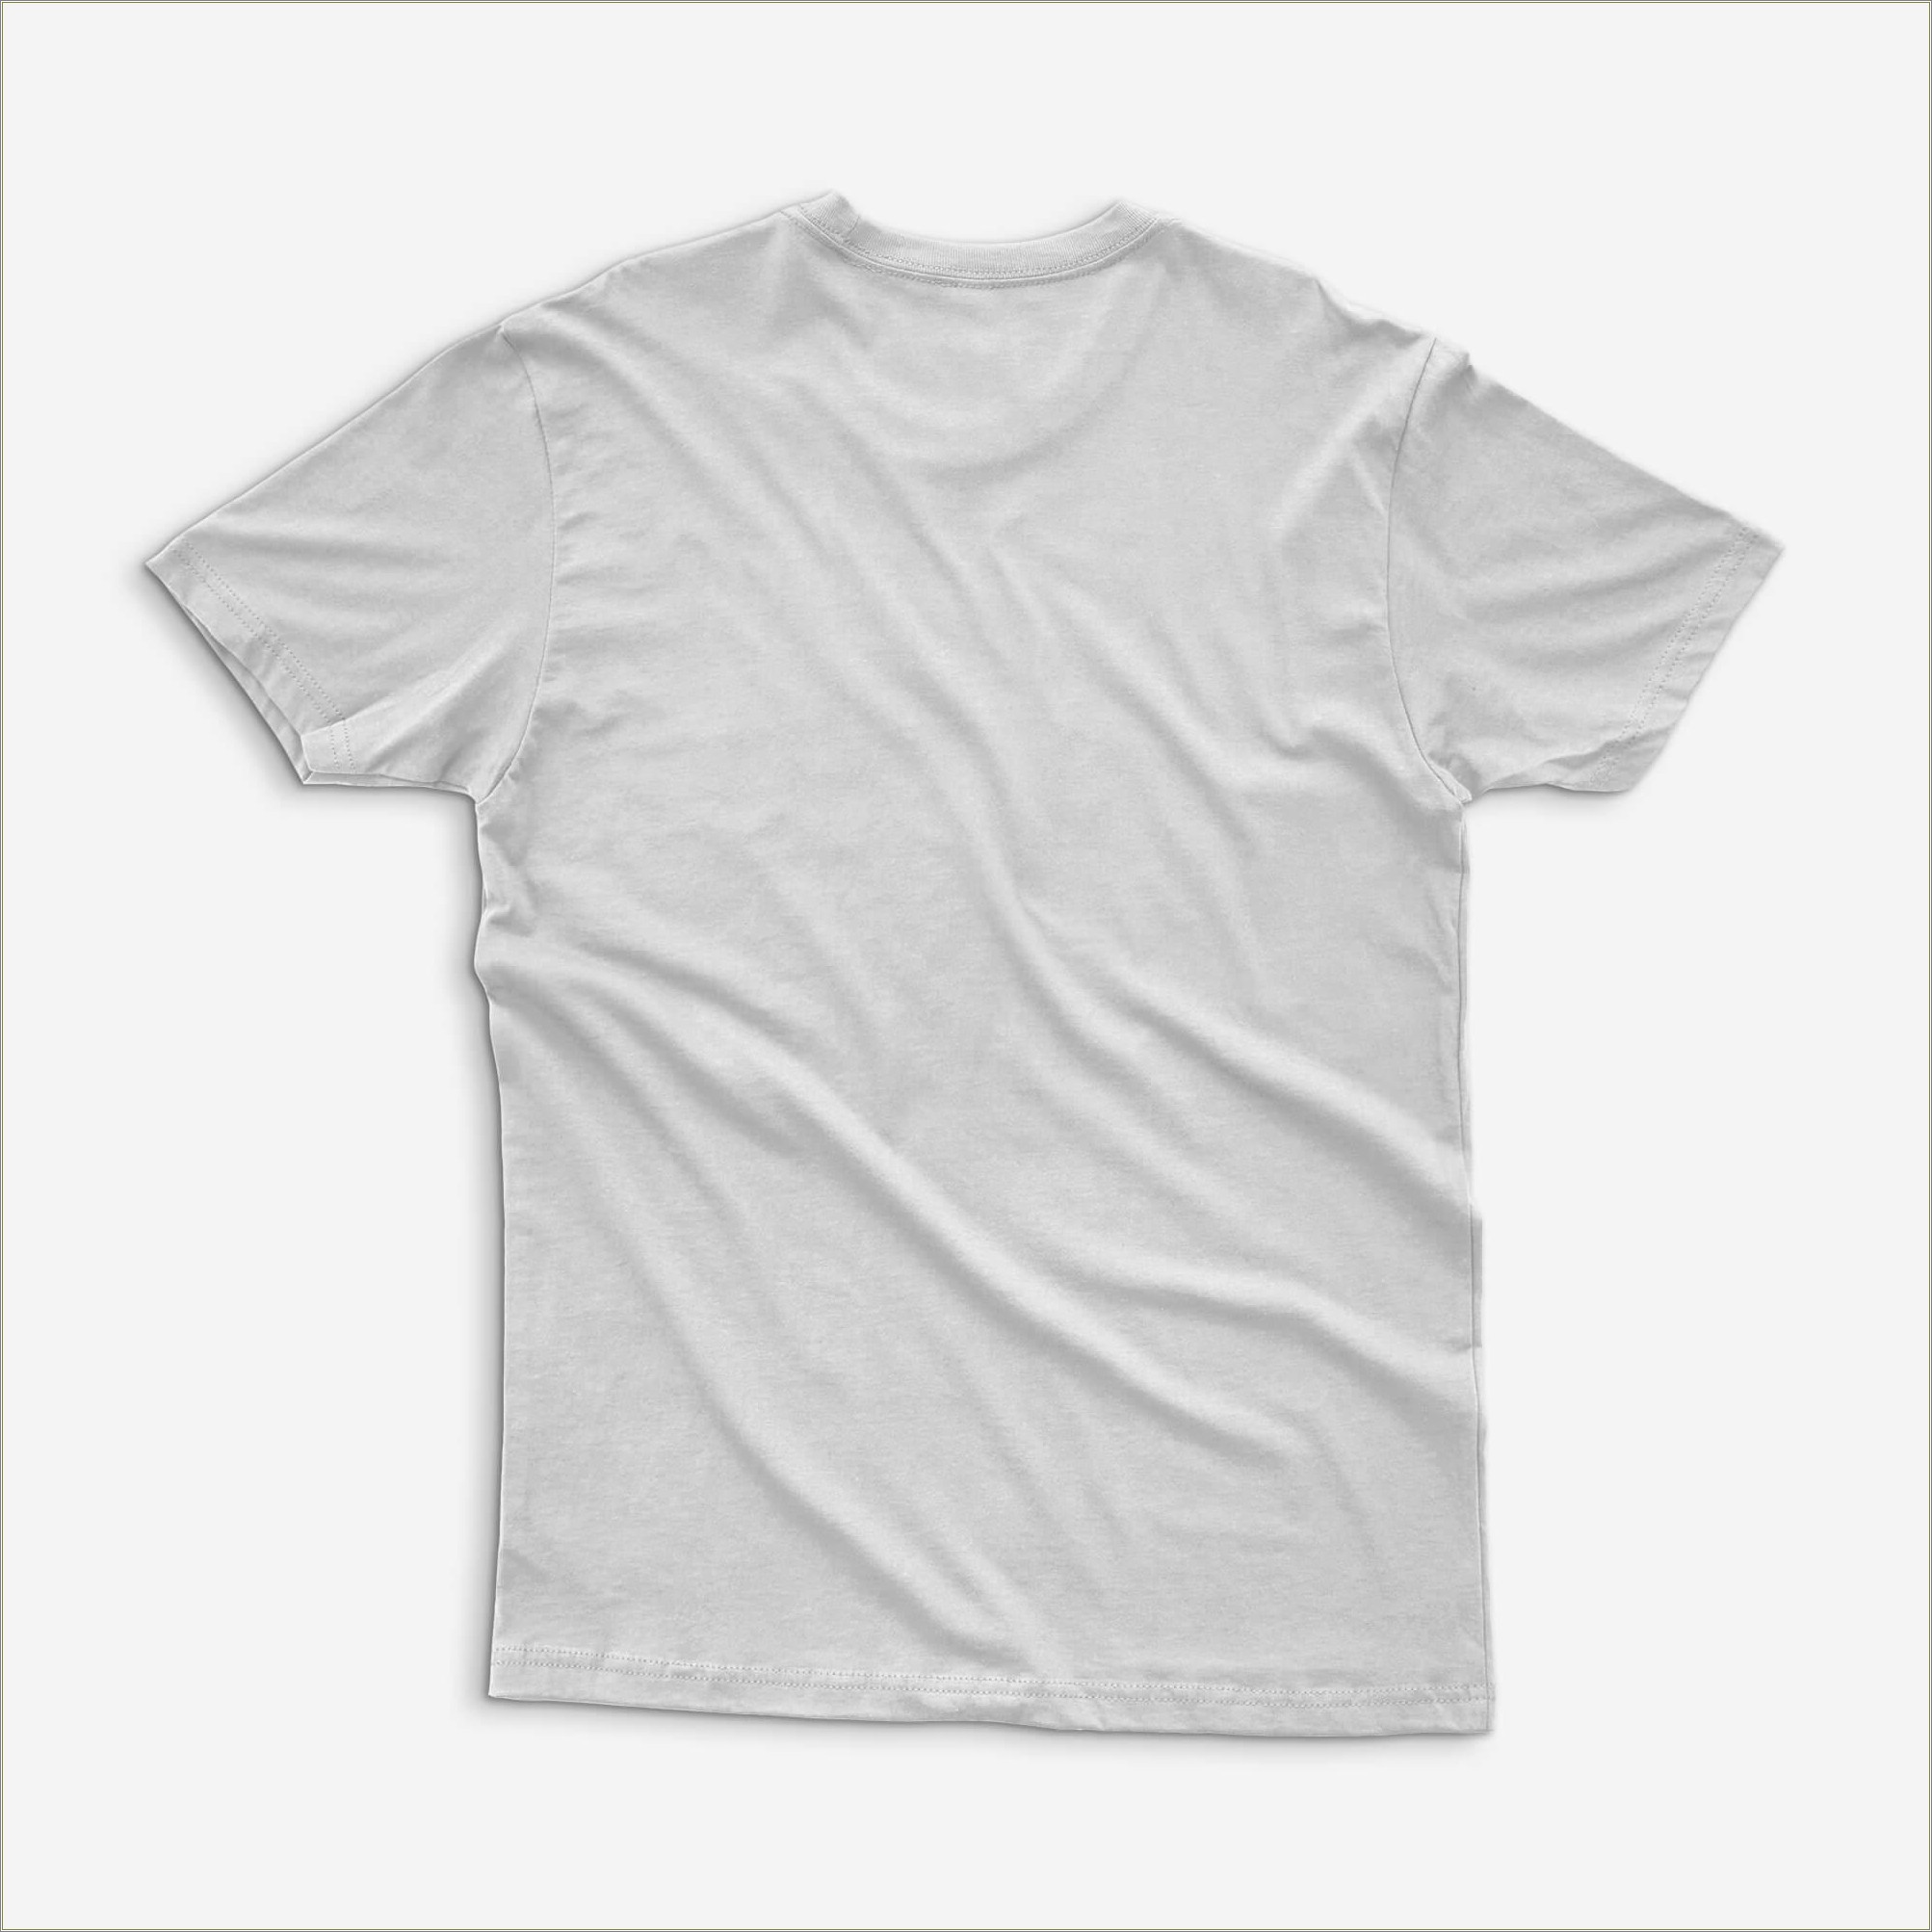 Free Plain T Shirt Mockup Template